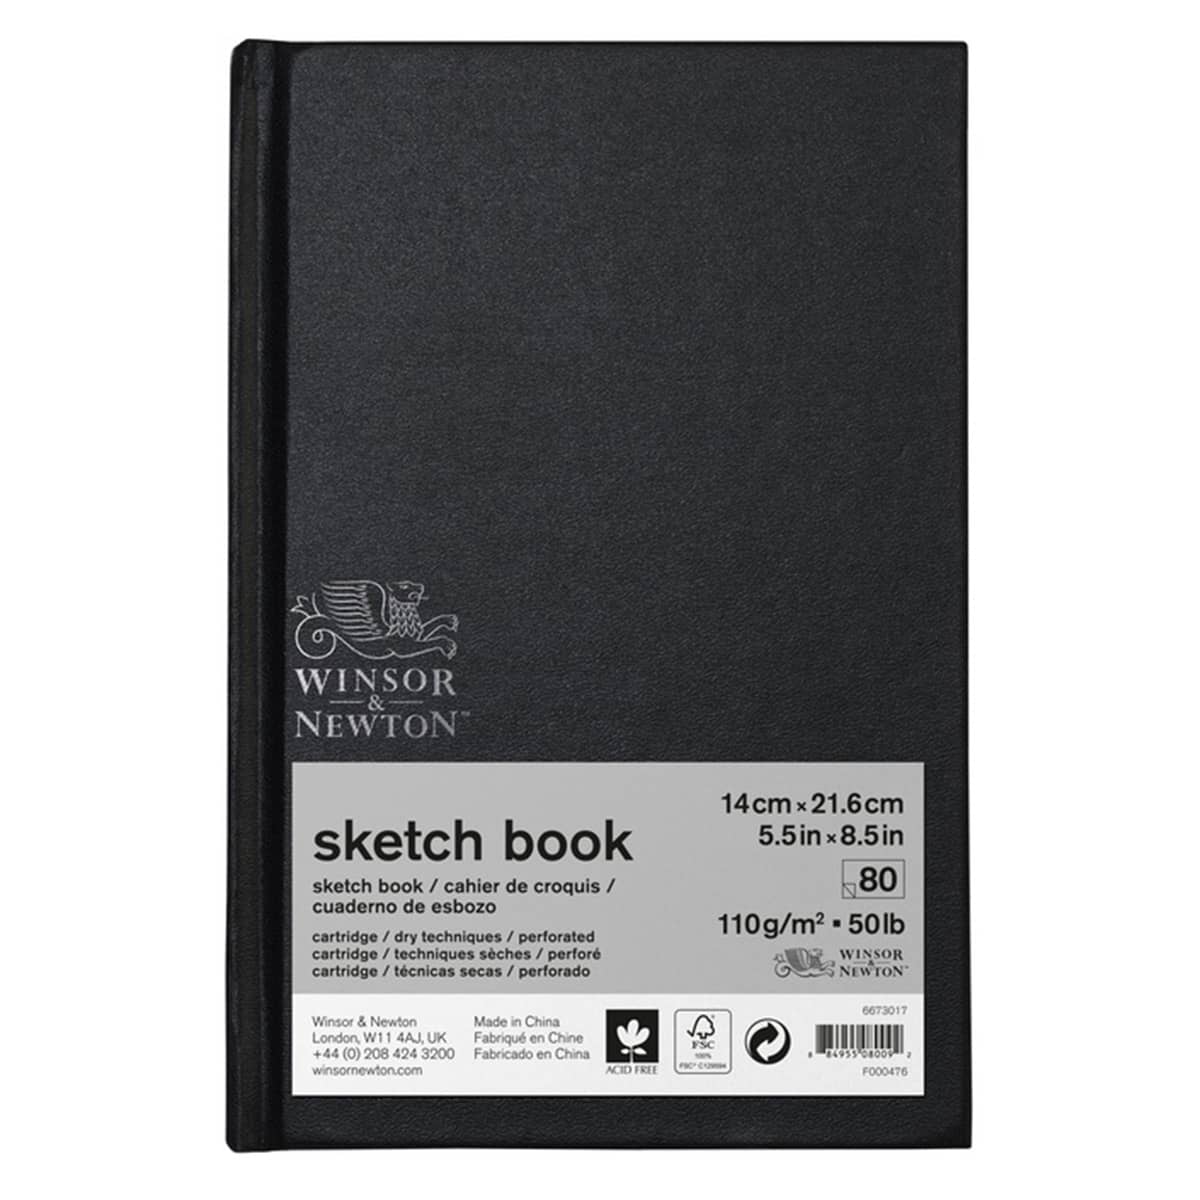 Completed Arteza Sketchbook Flip-through  Sketch book, Small sketchbook,  Travel art journal